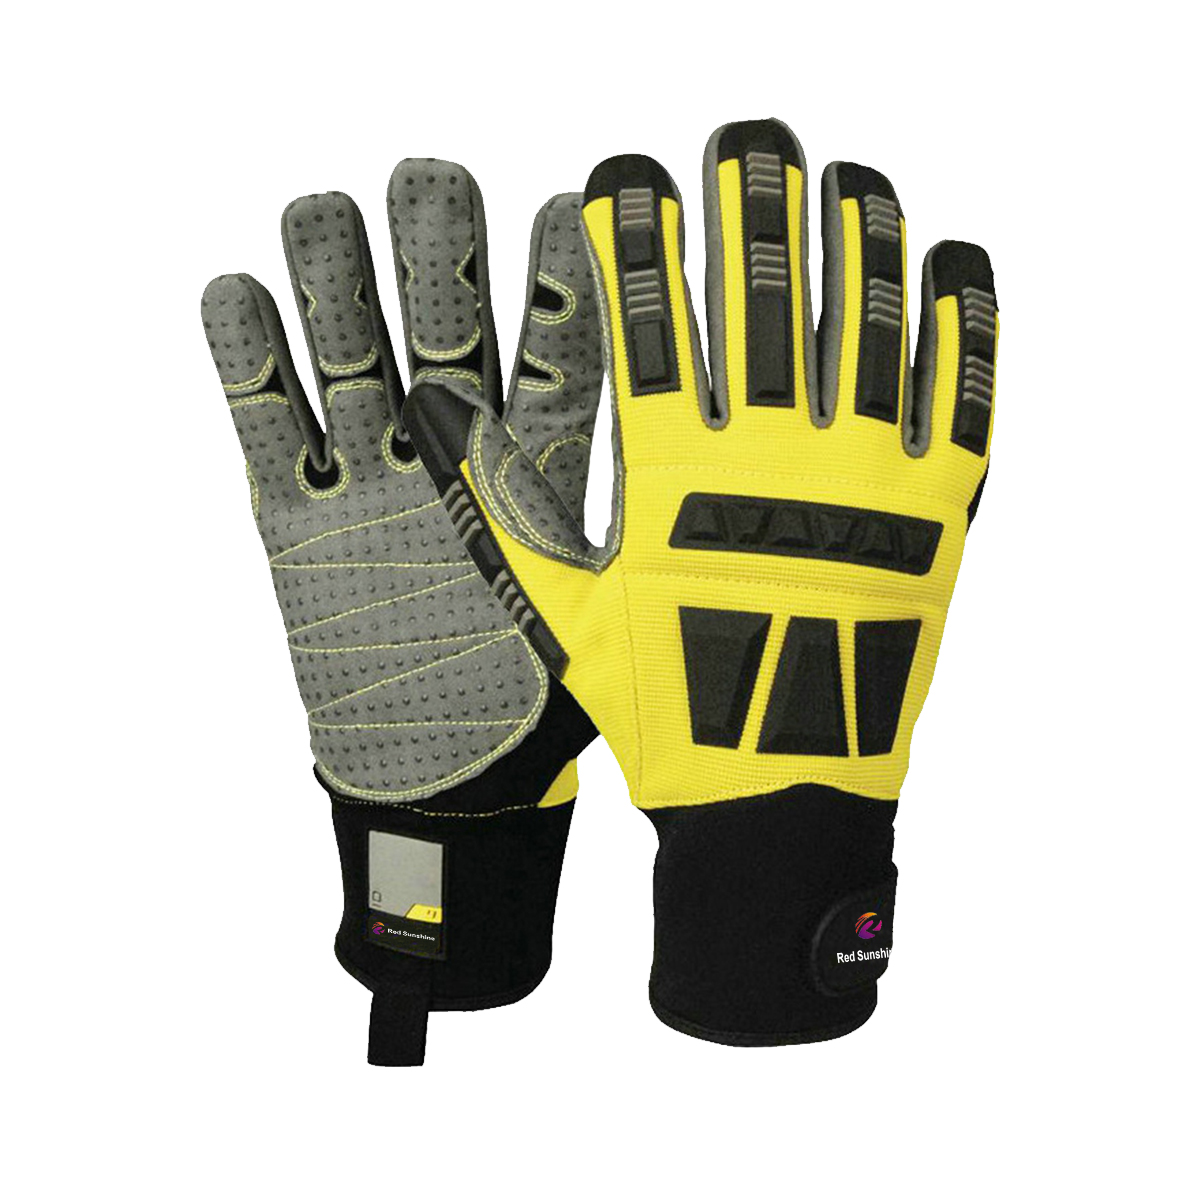 Rettungshandschuhe / Technische Rettungshandschuhe / TPR-Handschuhe für strukturelle Brandbekämpfung